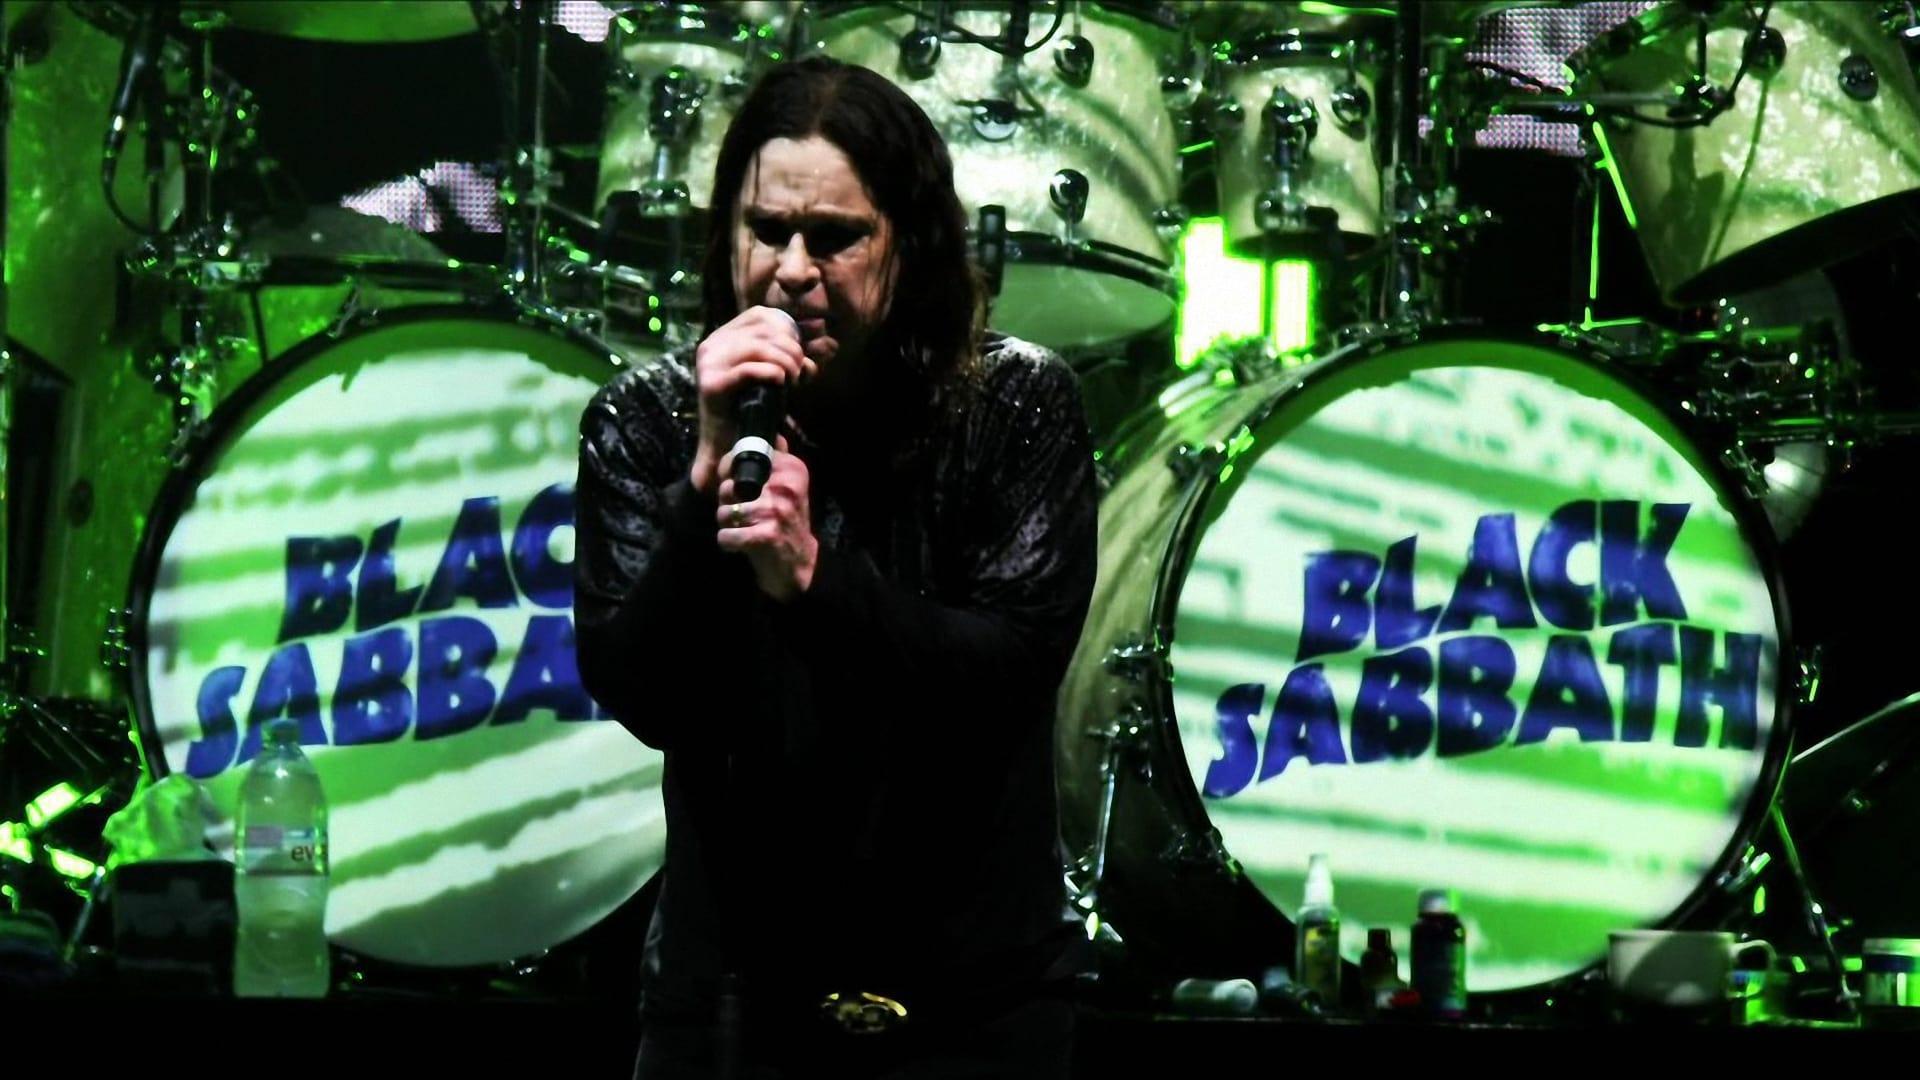 Black Sabbath - The End - Live In Birmingham backdrop